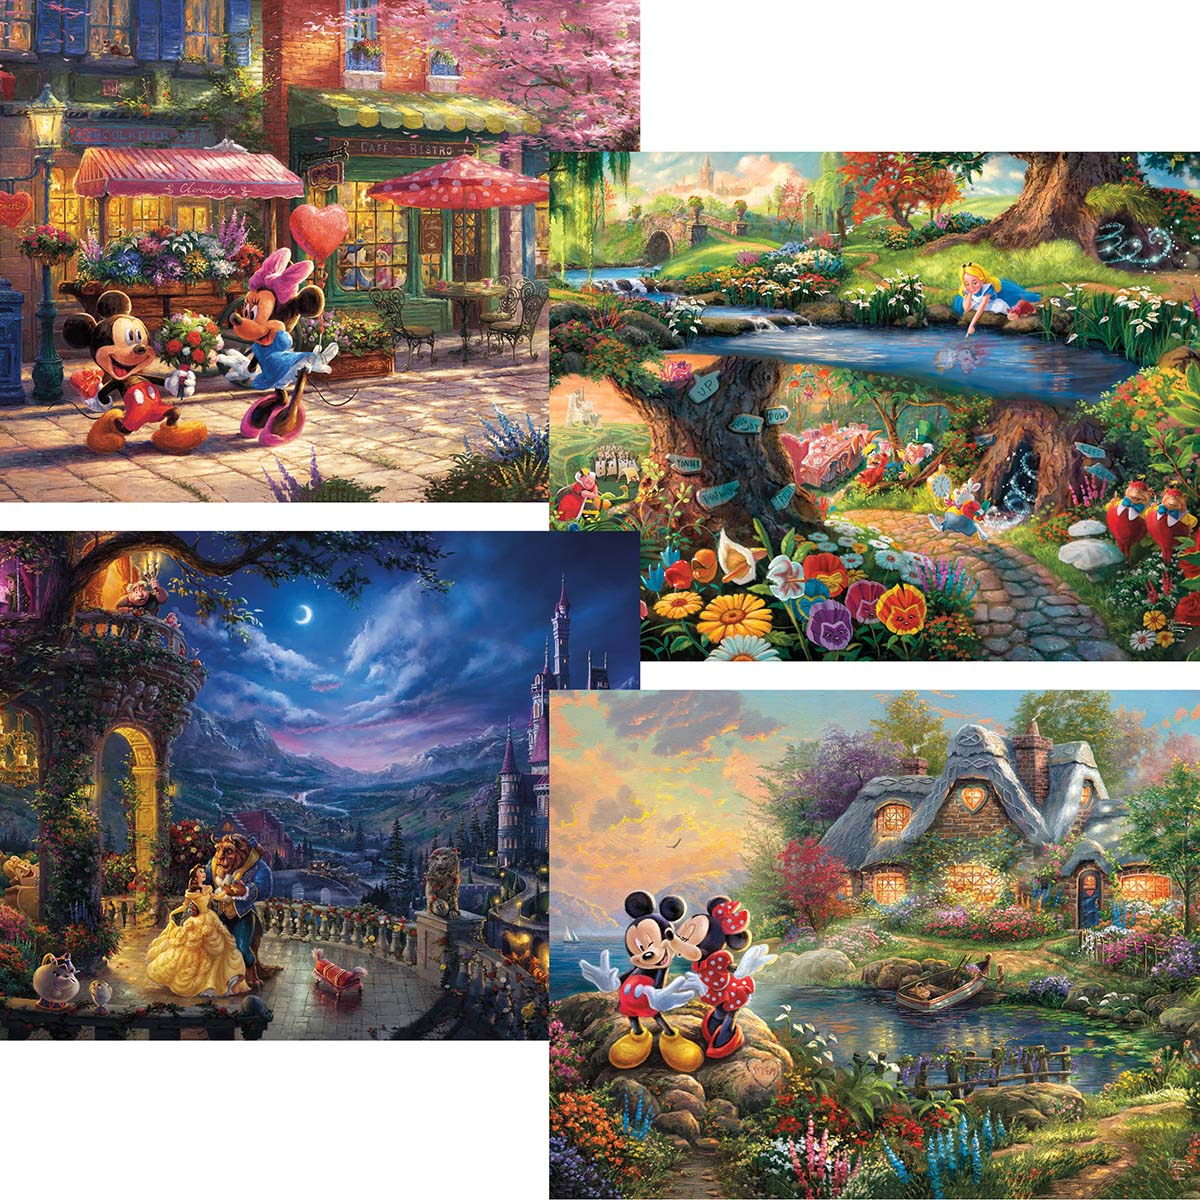 Disney Jigsaw Puzzles & Art